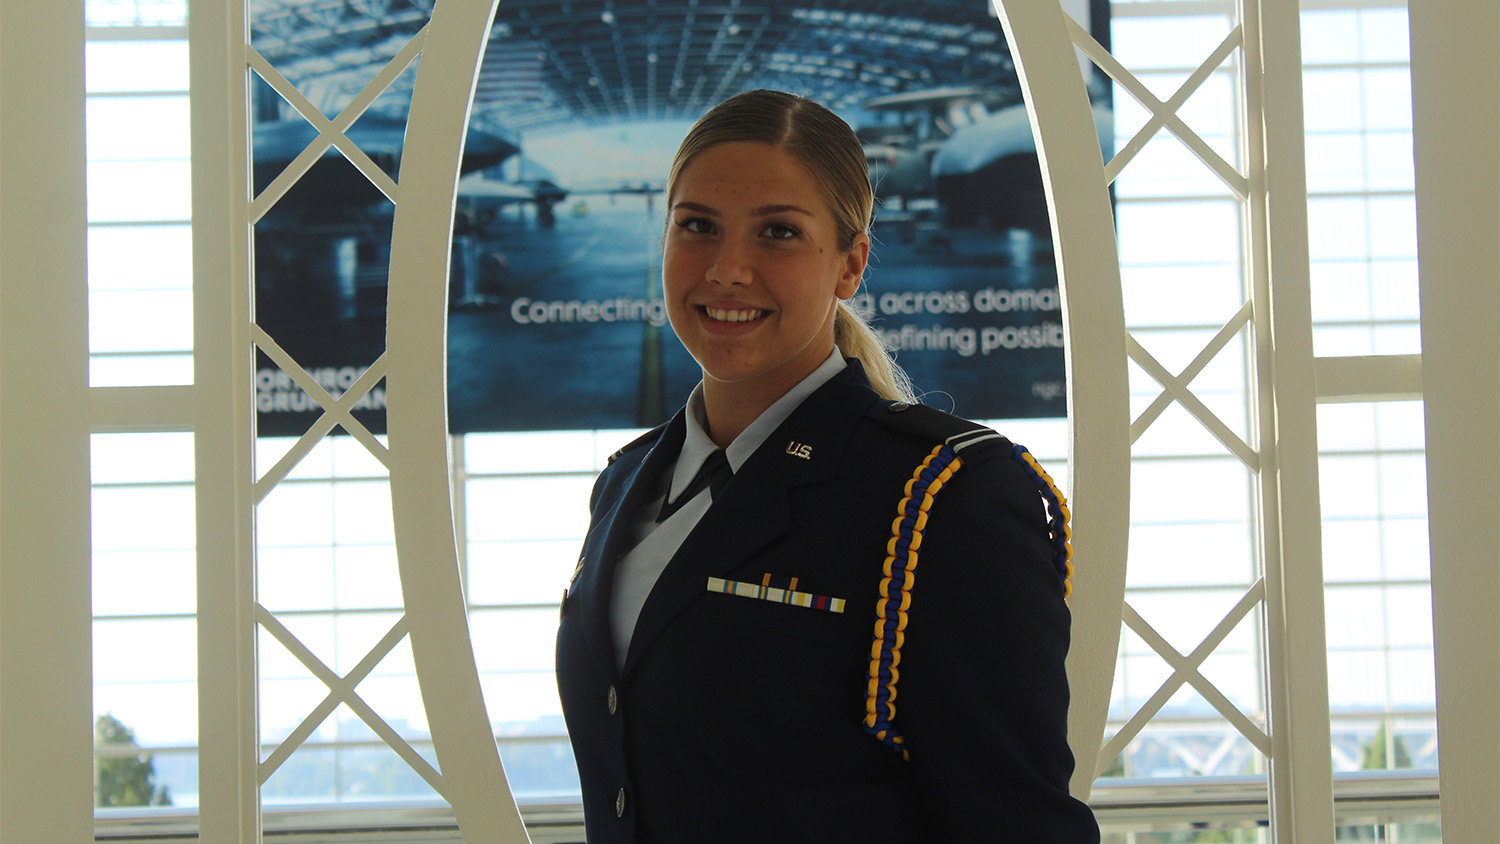 Amina Becirovic in uniform